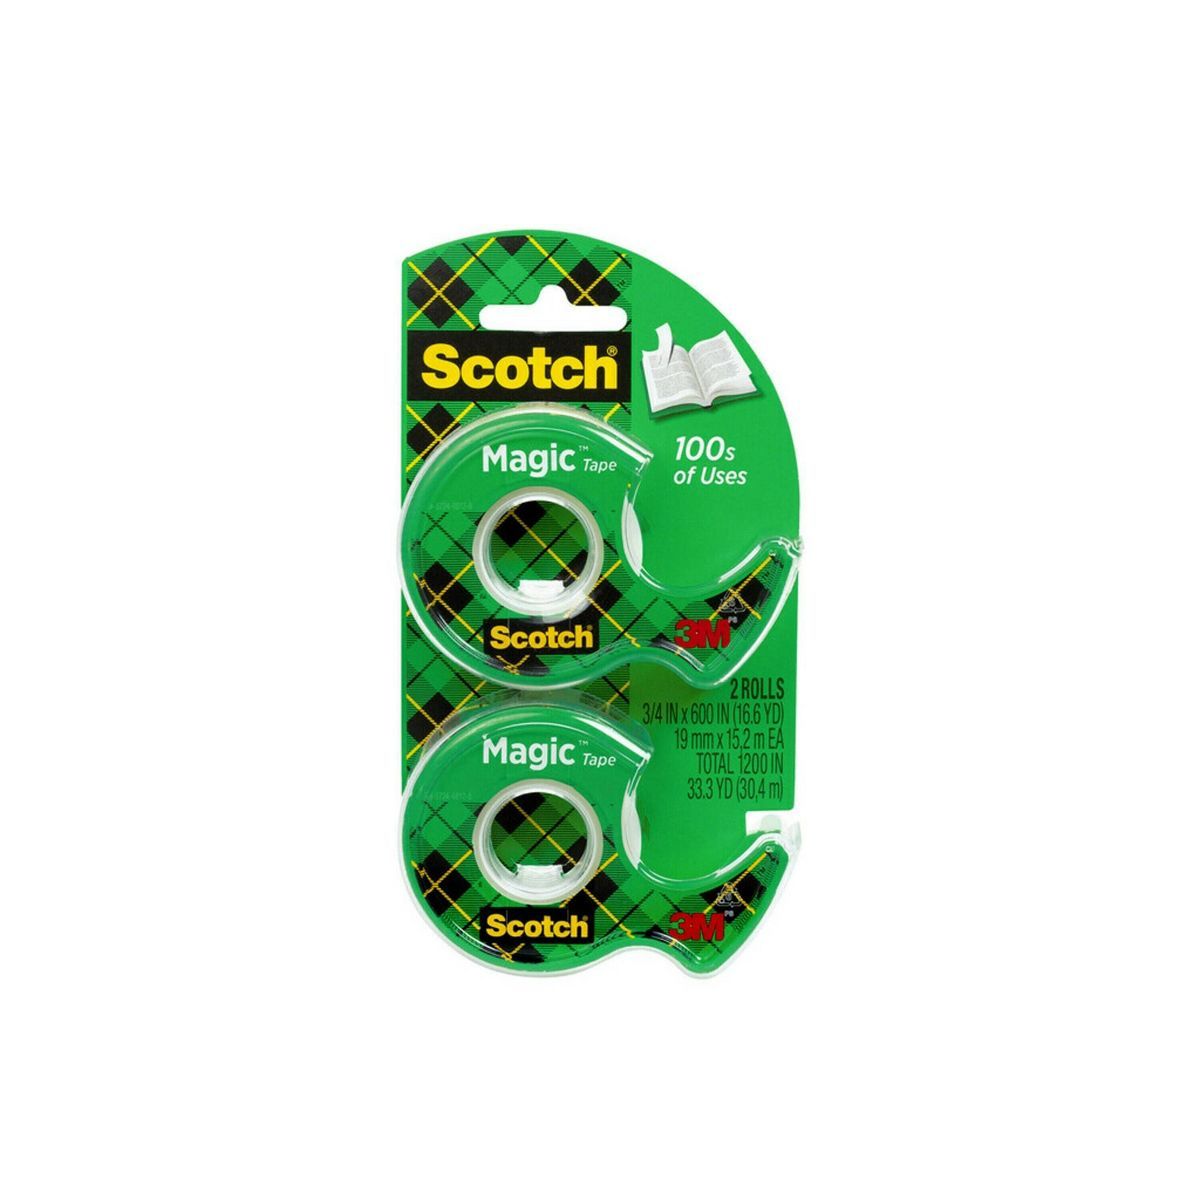 Scotch 2pk Magic Tape Matte Finish 3/4" x 600" | Target